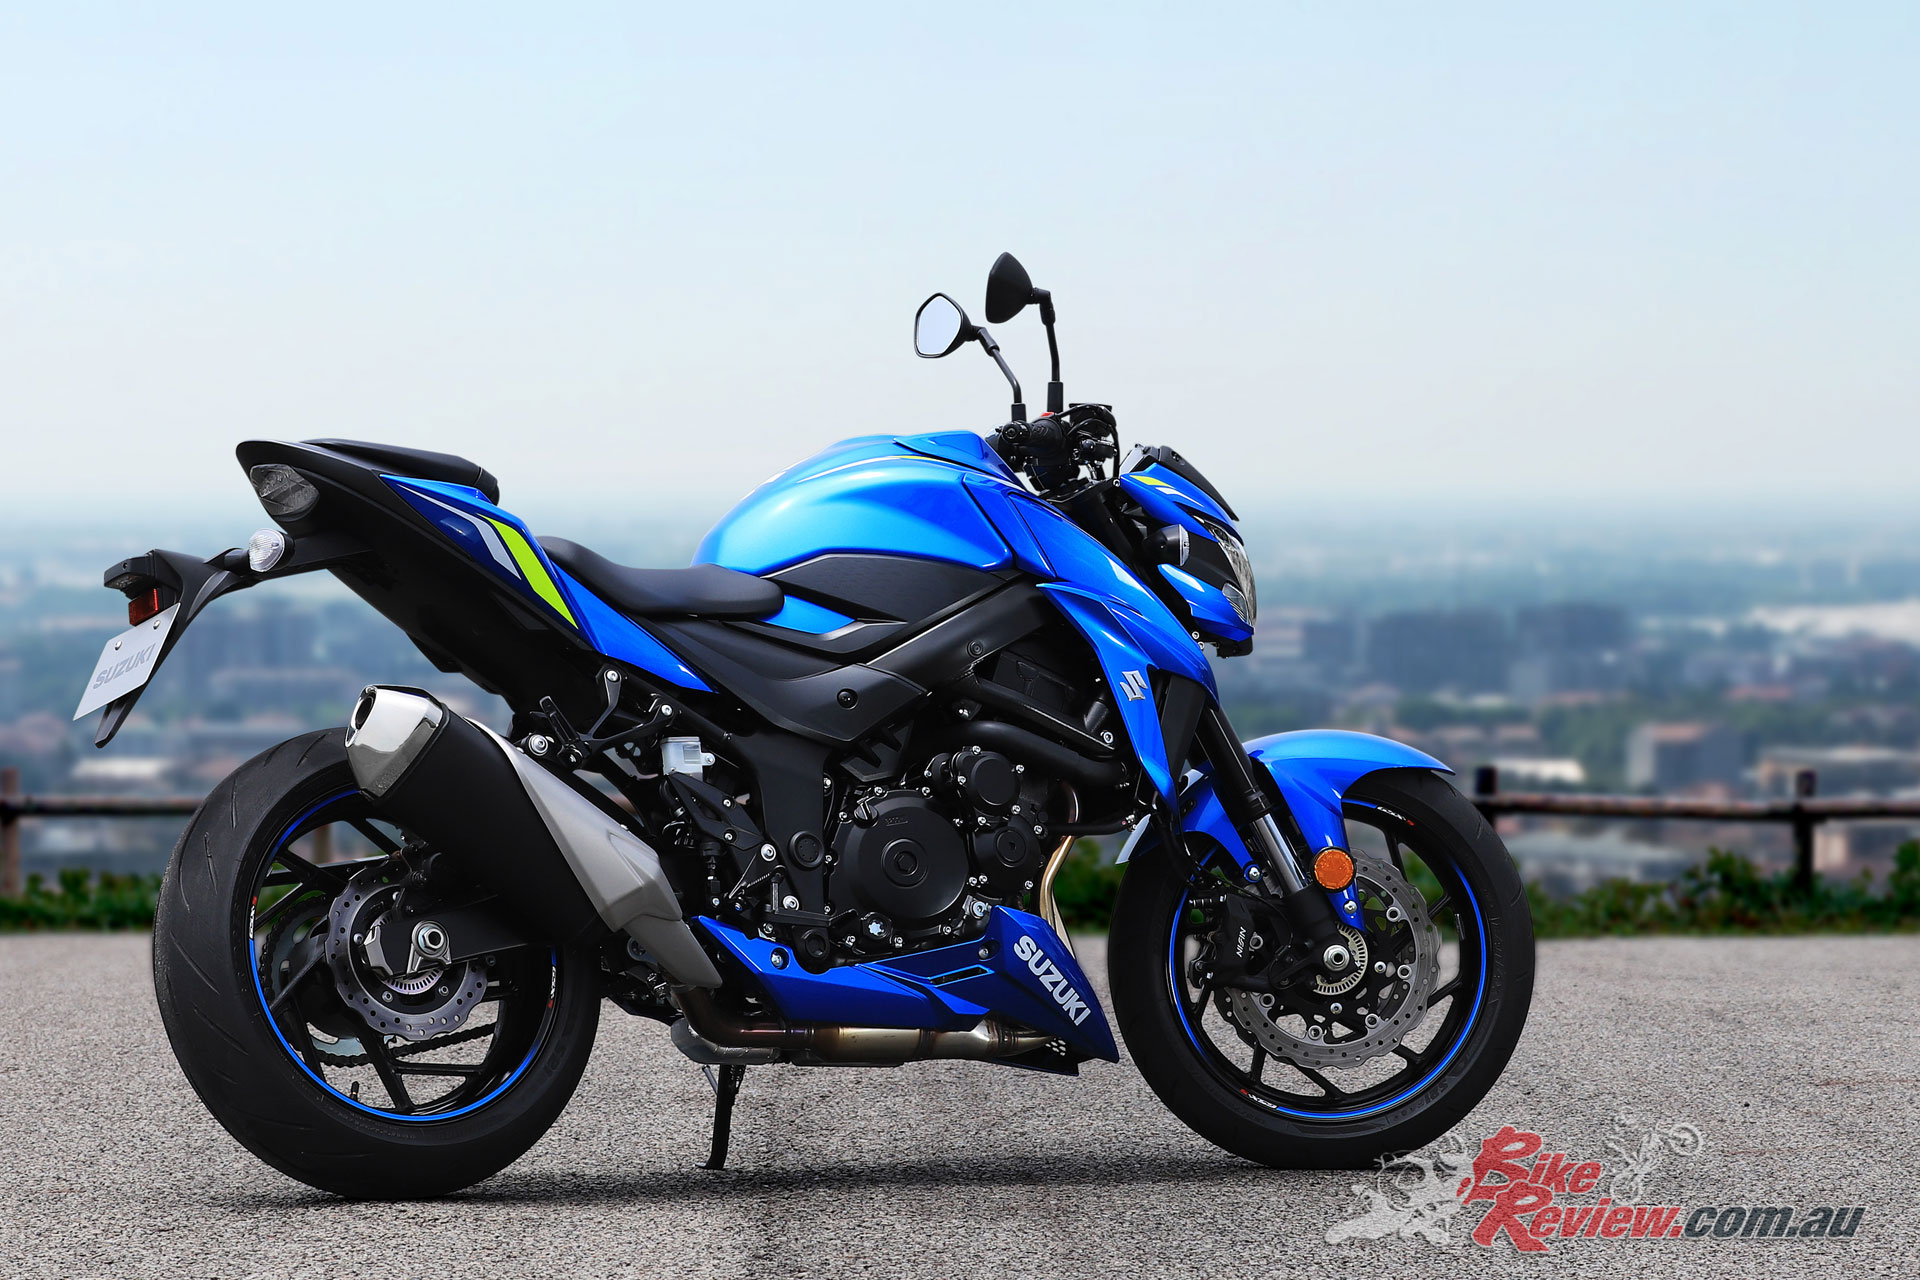 Review: 2020 Suzuki GSX-S750 Nakedbike - Bike Review